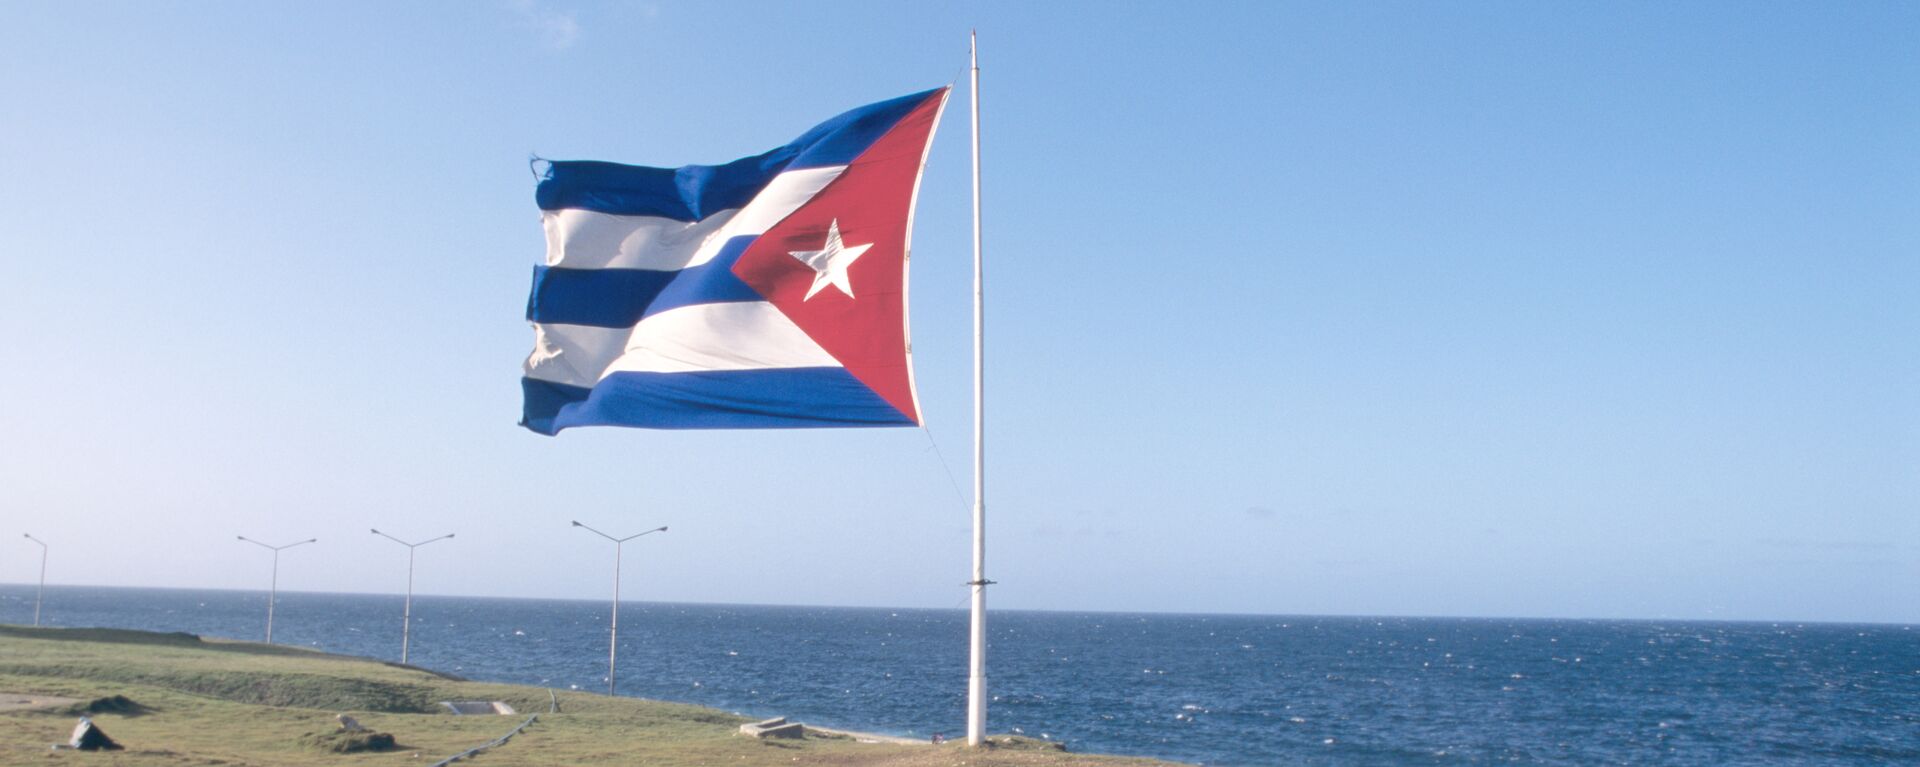 Cuba, flag - Sputnik International, 1920, 29.09.2022